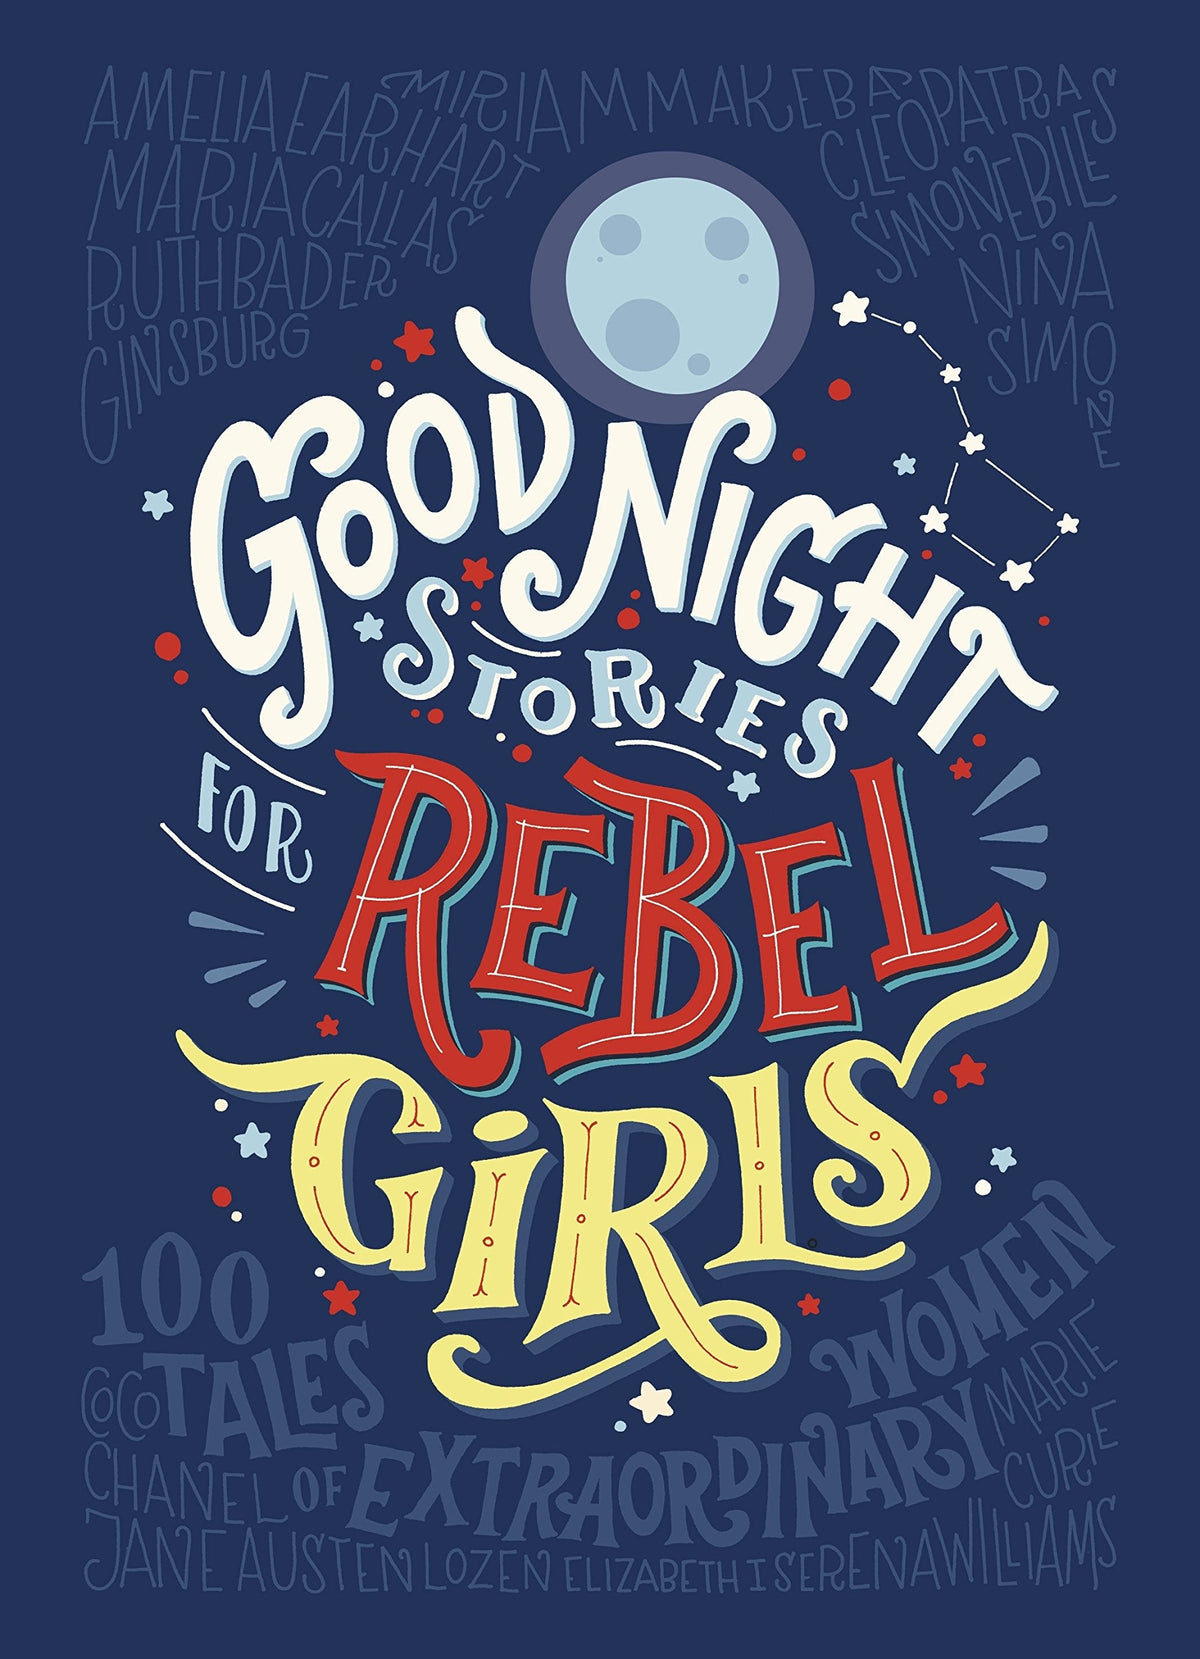 Good Night Stories For Rebel Girls - Volume 1